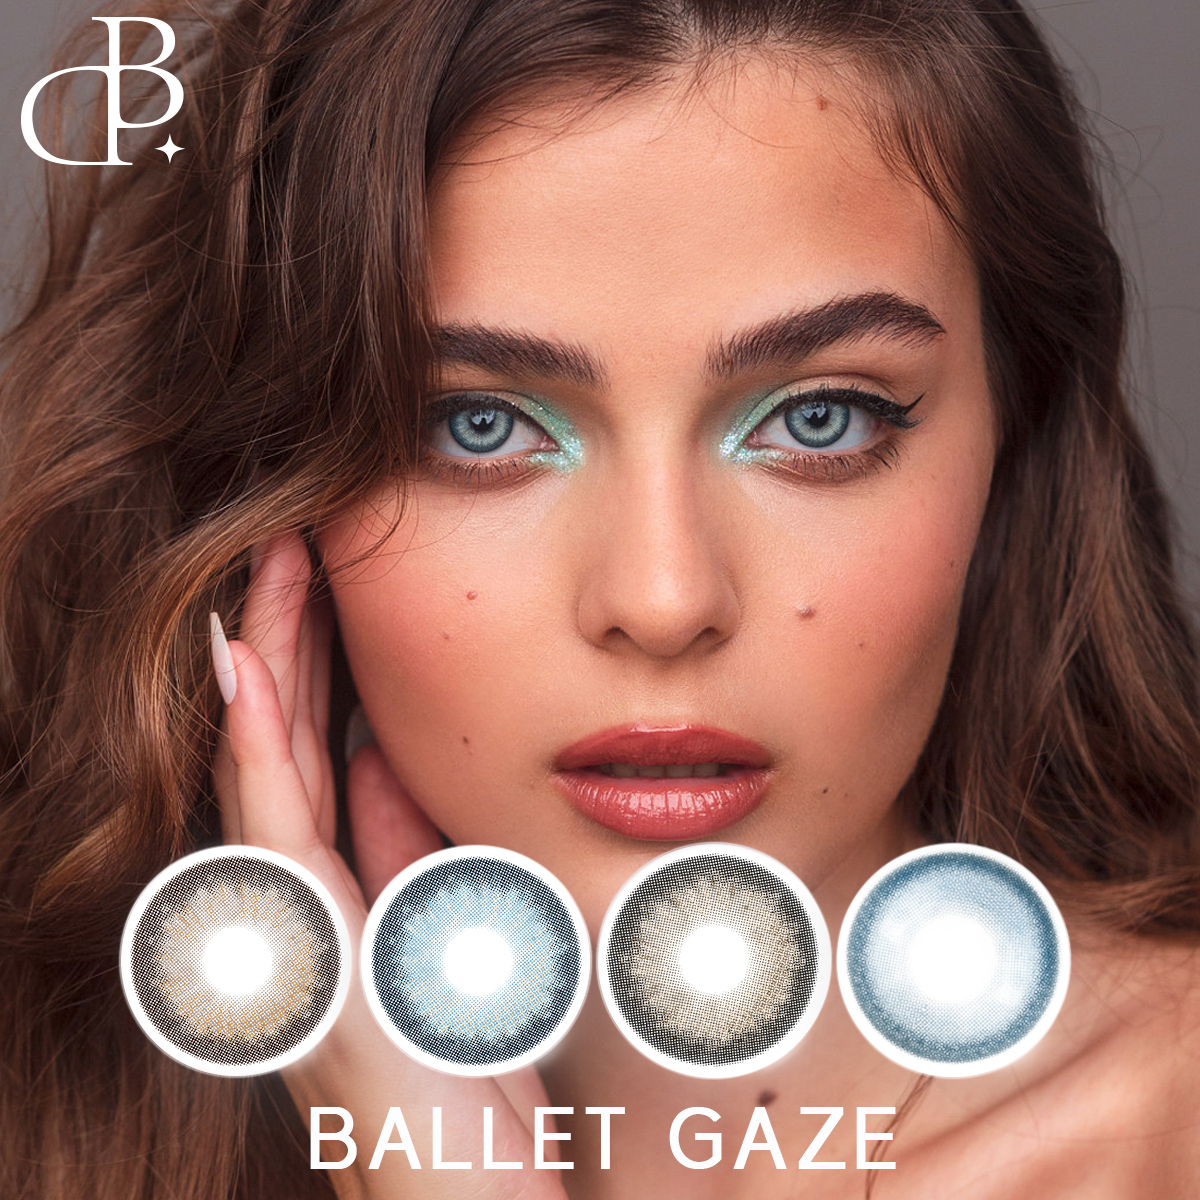 BALLET GAZE nature Clear Soft Contact Lenses cosmetic wholesale colored contact lenses non prescription